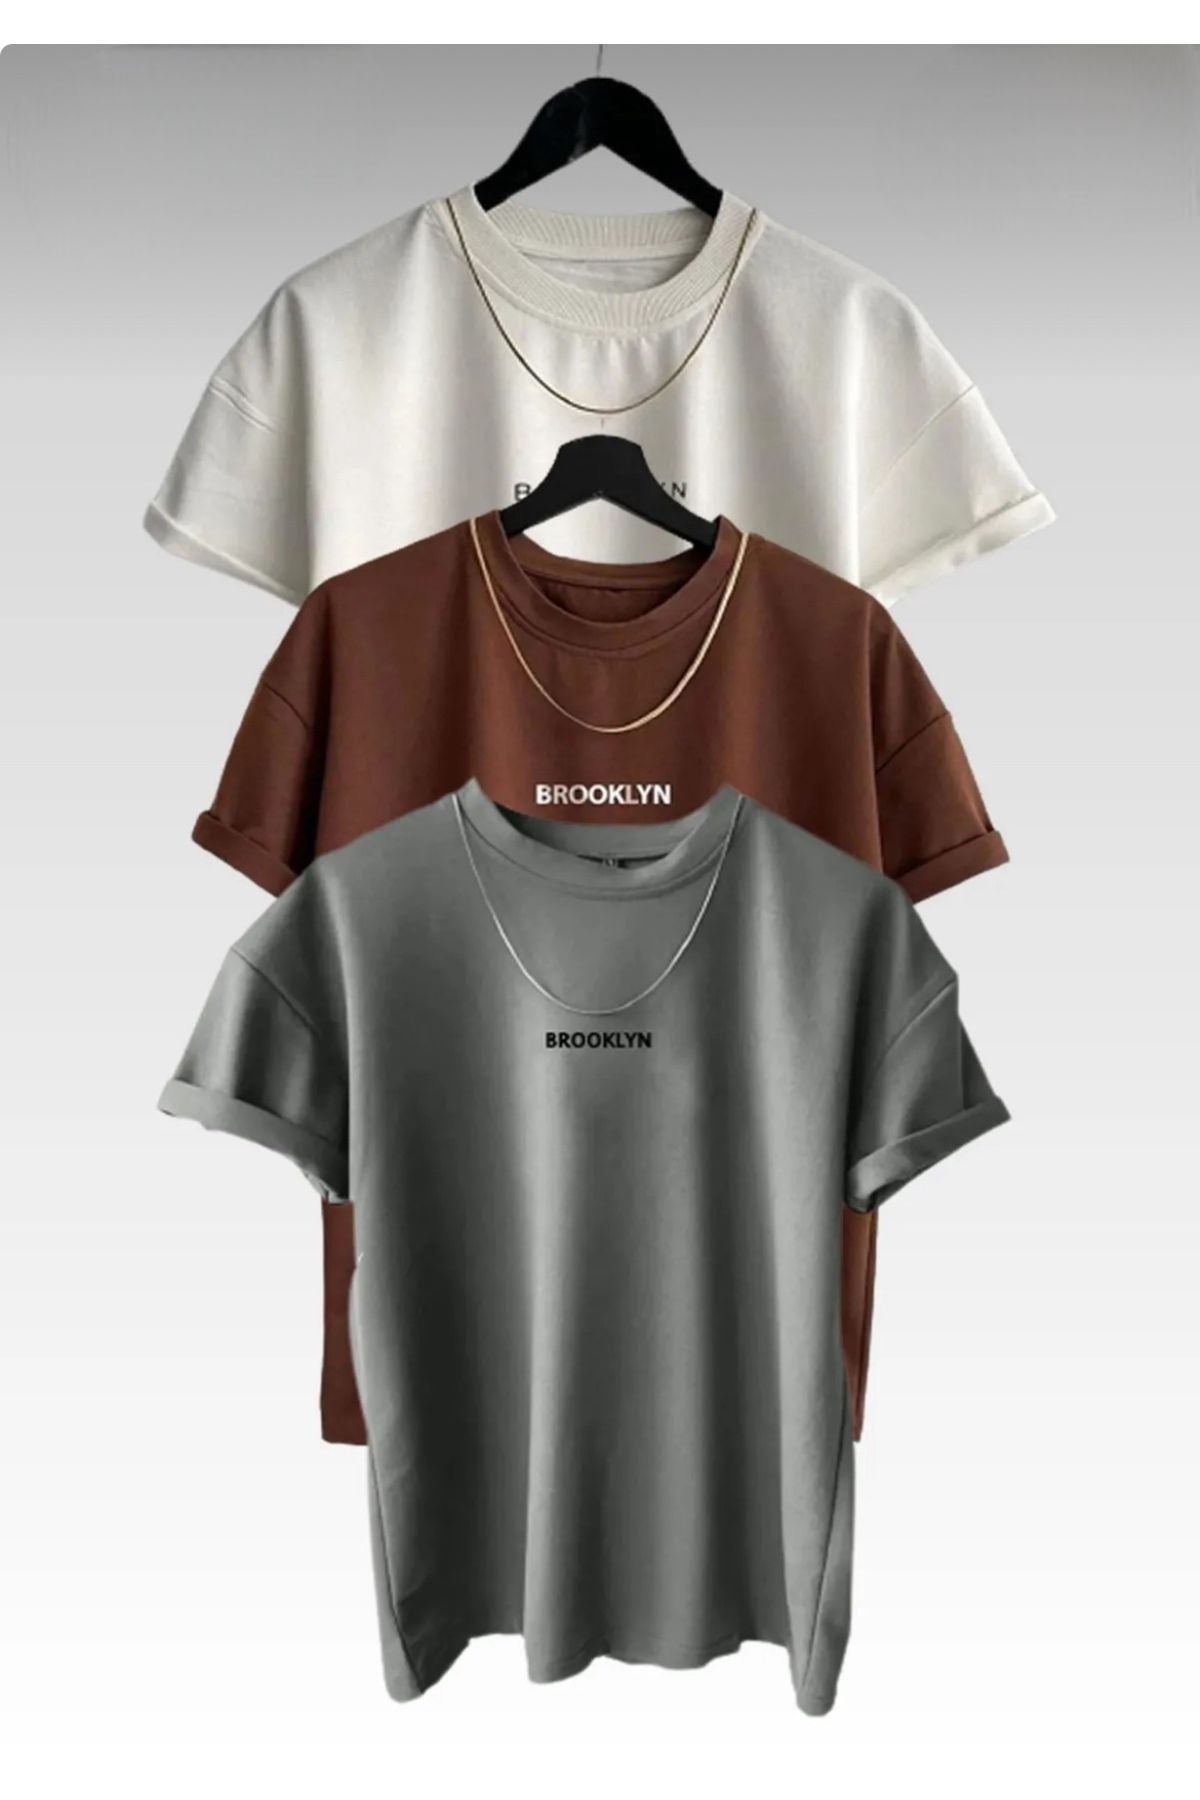 NewCabin Unisex Brooklyn Baskılı 3lü Paket Kahverengi- Duman Grisi- Beyaz Pamuklu T-shirt